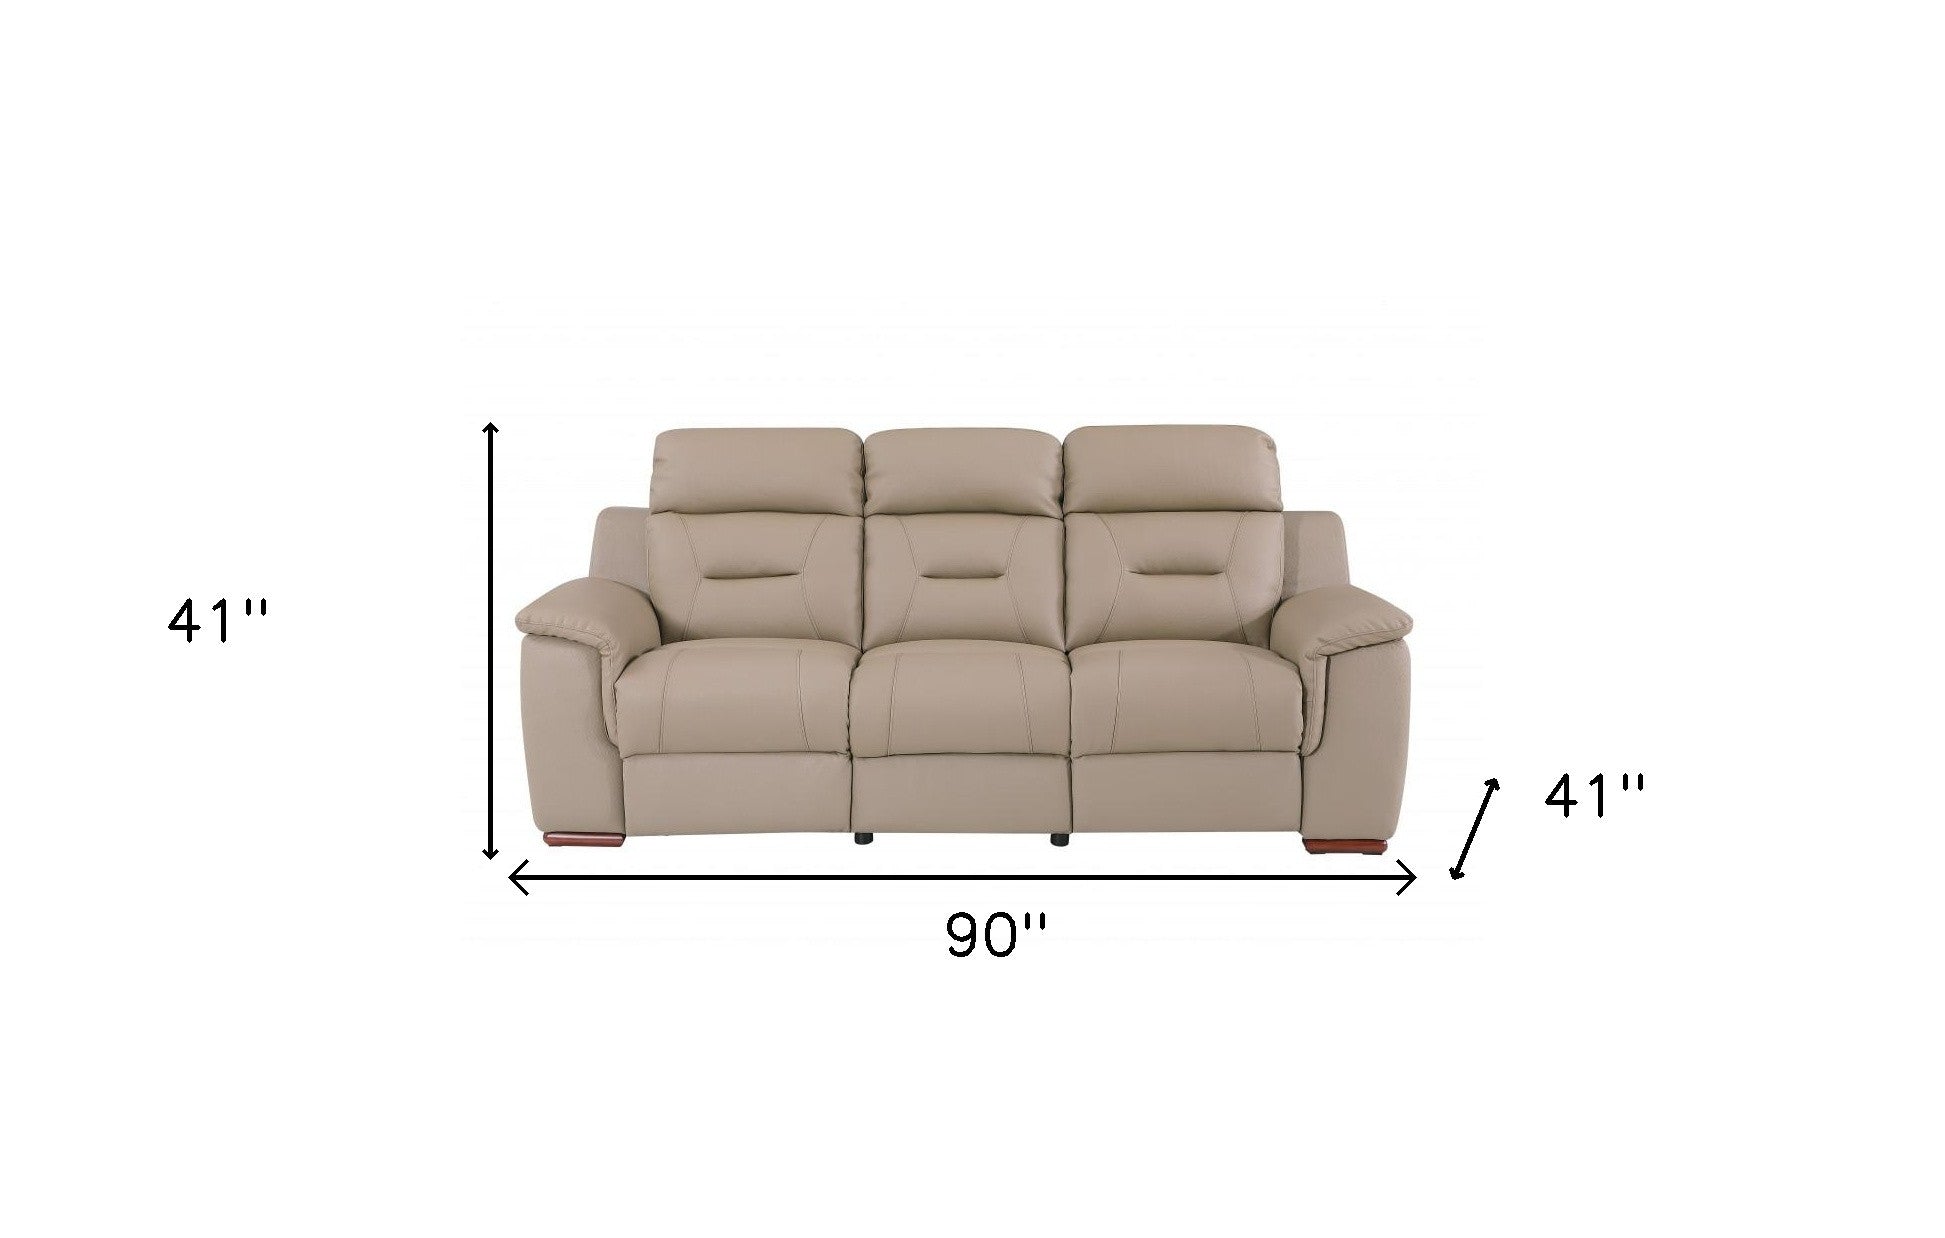 90" X 41" X 41" Modern Beige Leather Reclining Sofa